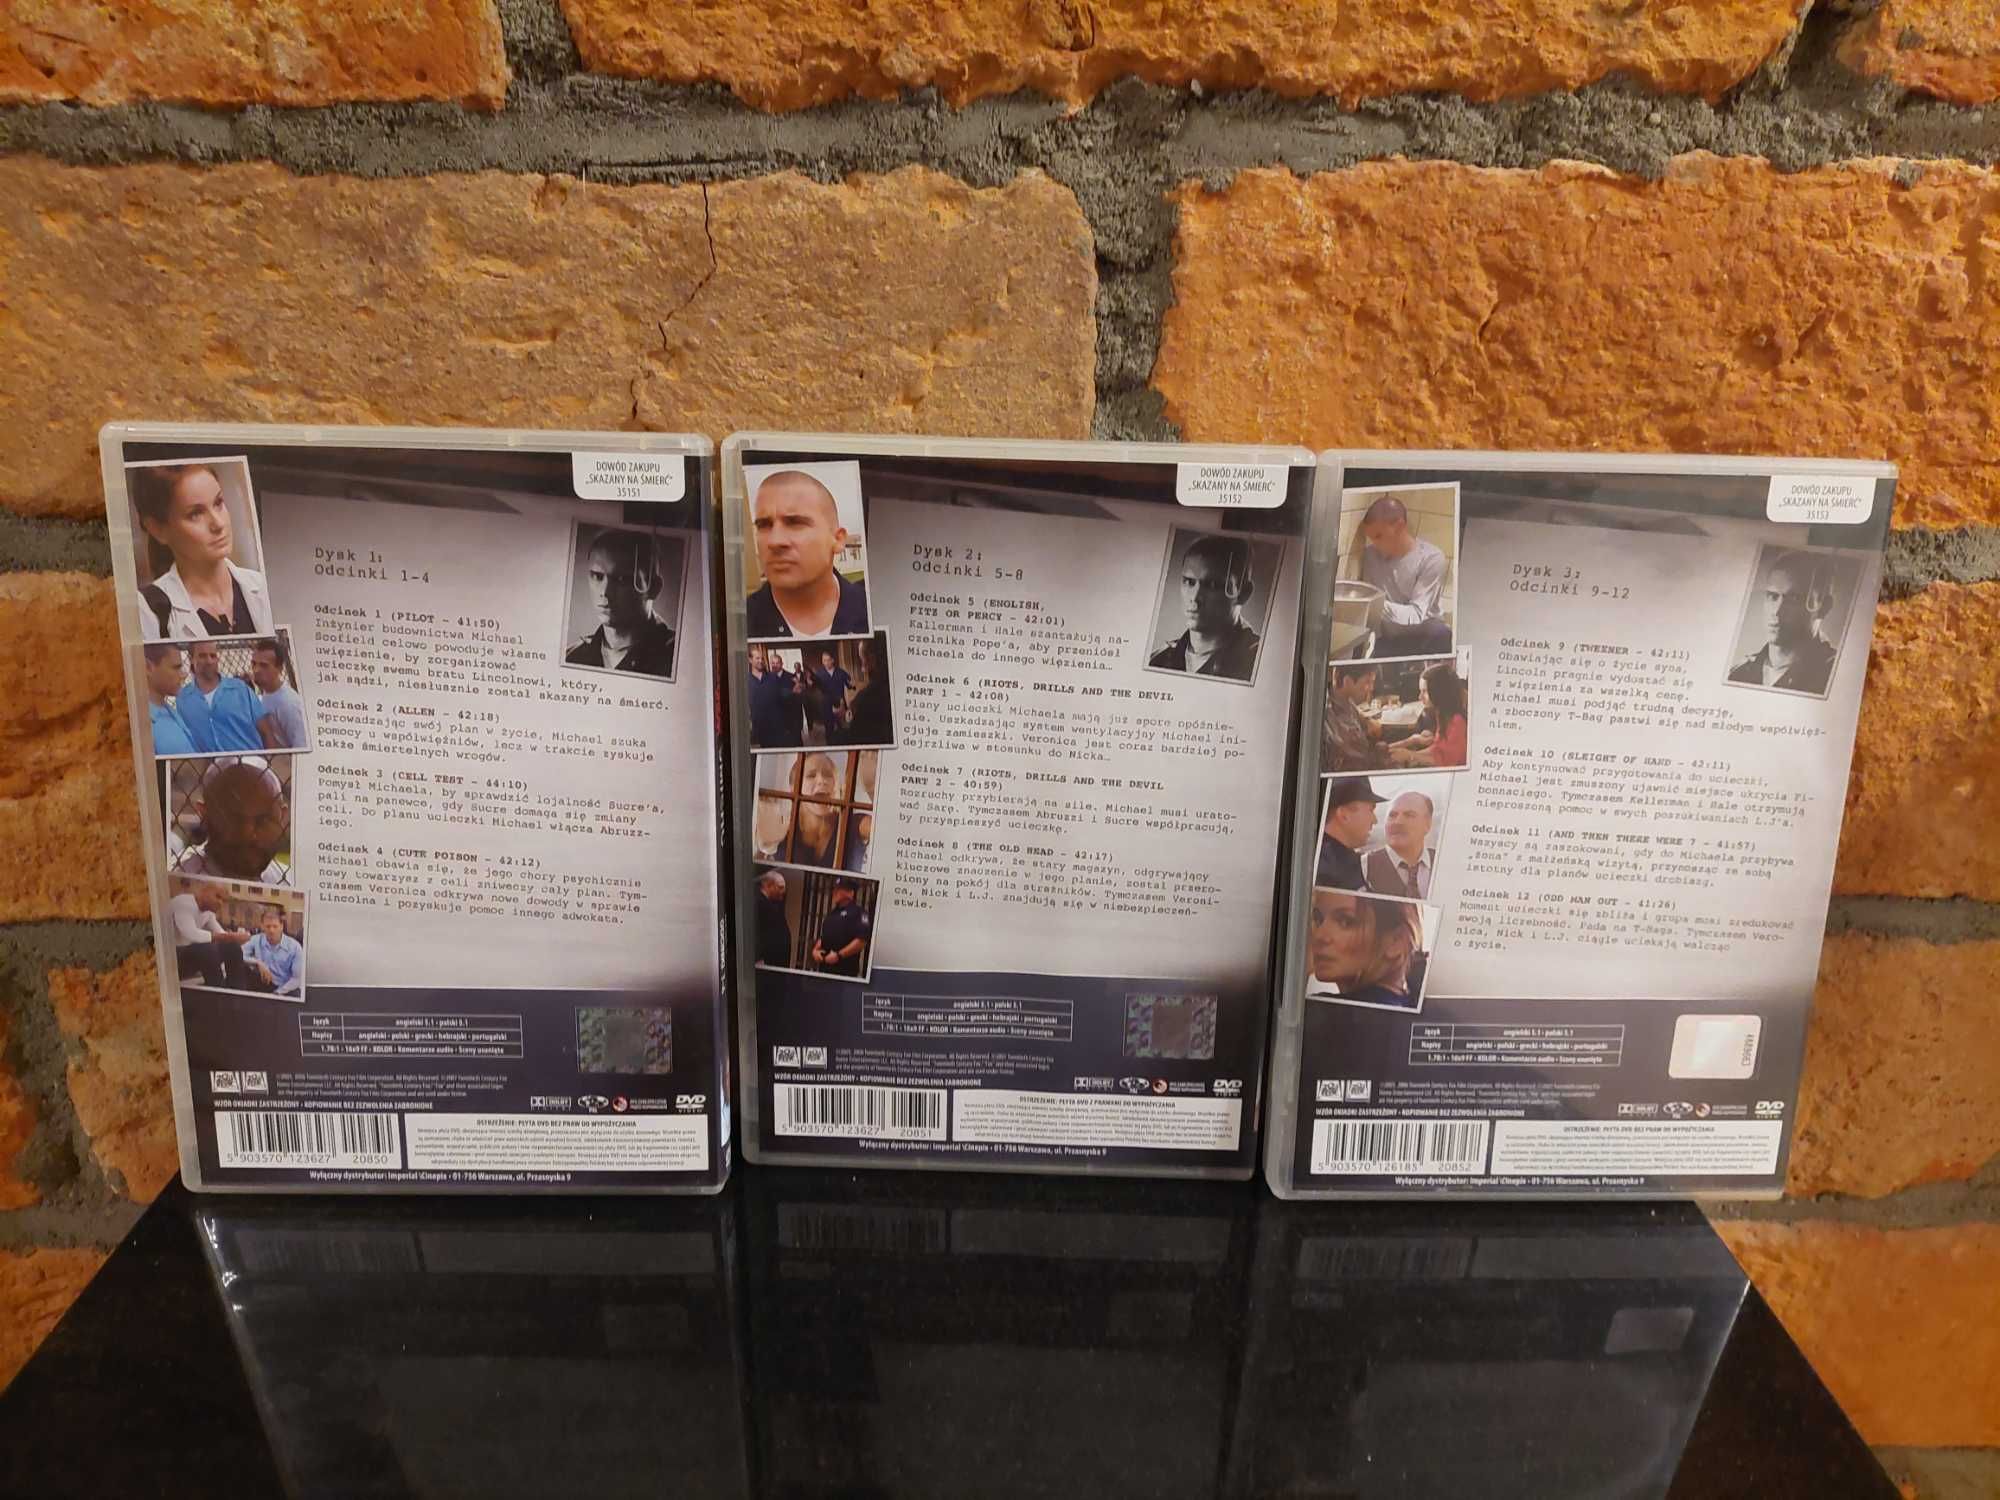 Film serial 6x DVD BOX PL Skazany na Śmierć Prison Break se 1 odc 1-22